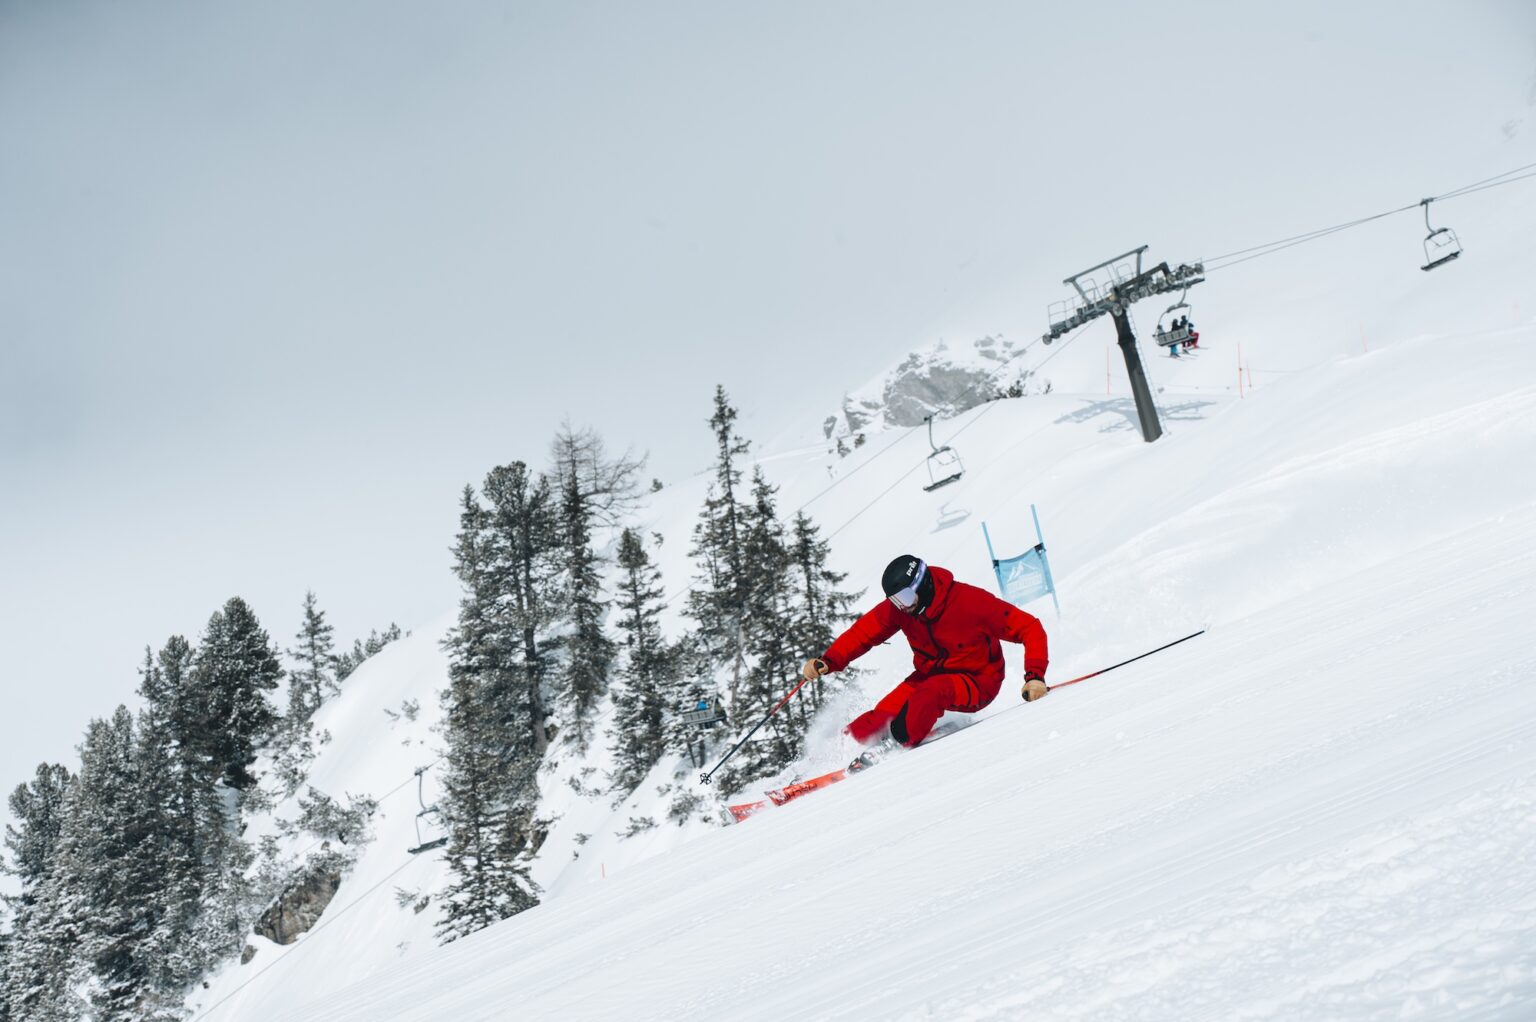 Graham Bell slalom skiing action shot